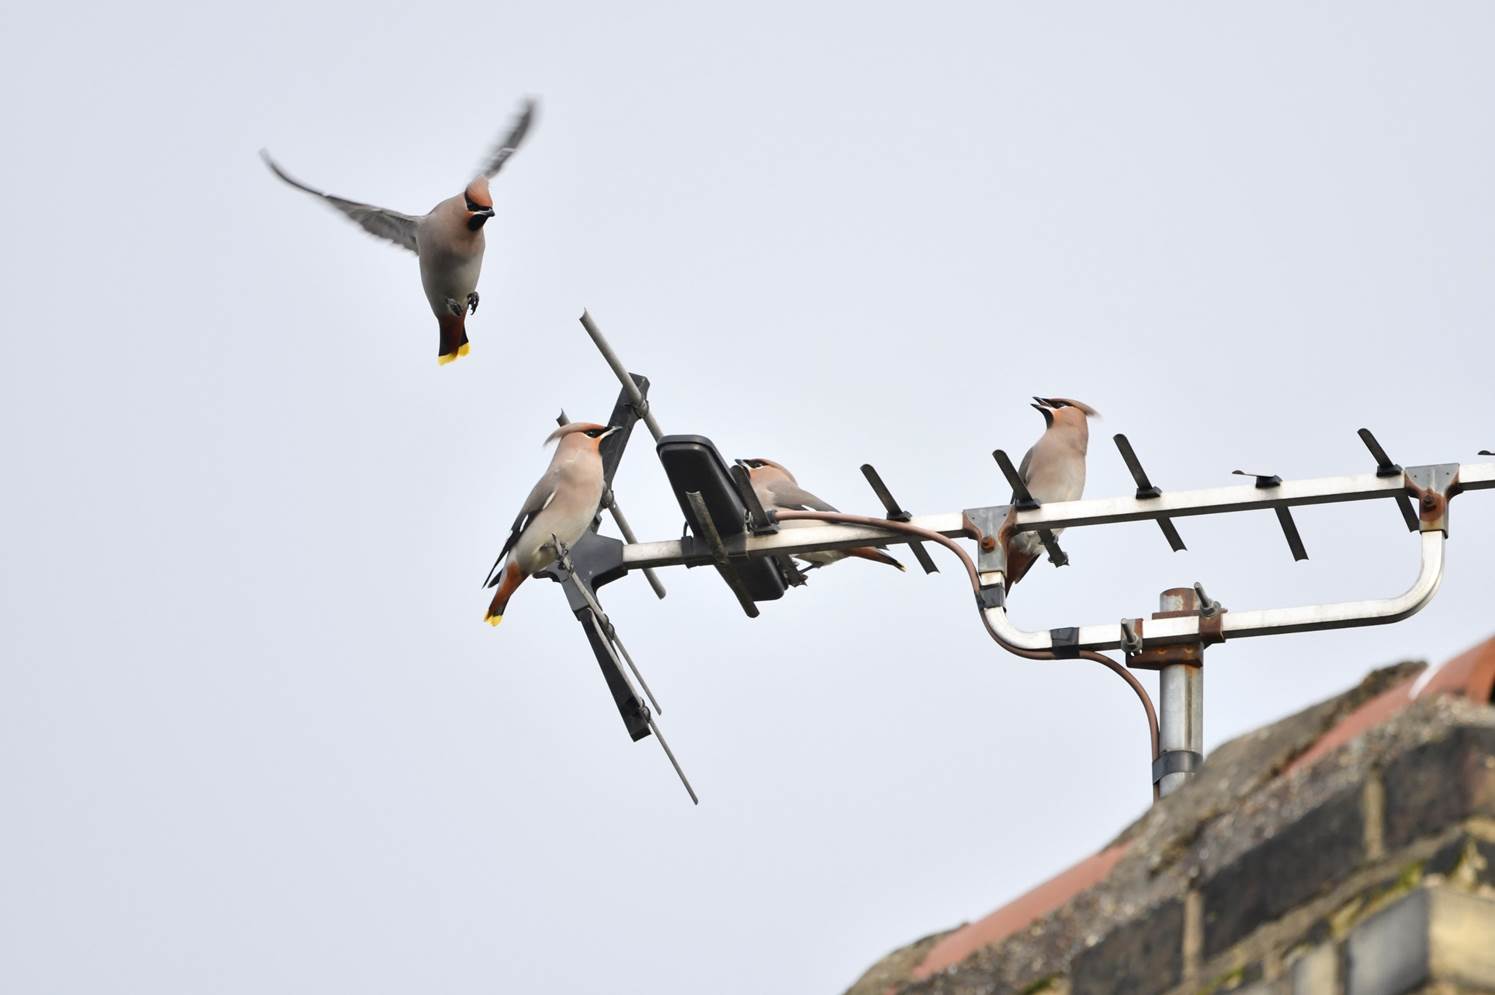 Birds flying birds on a antenna

Description automatically generated